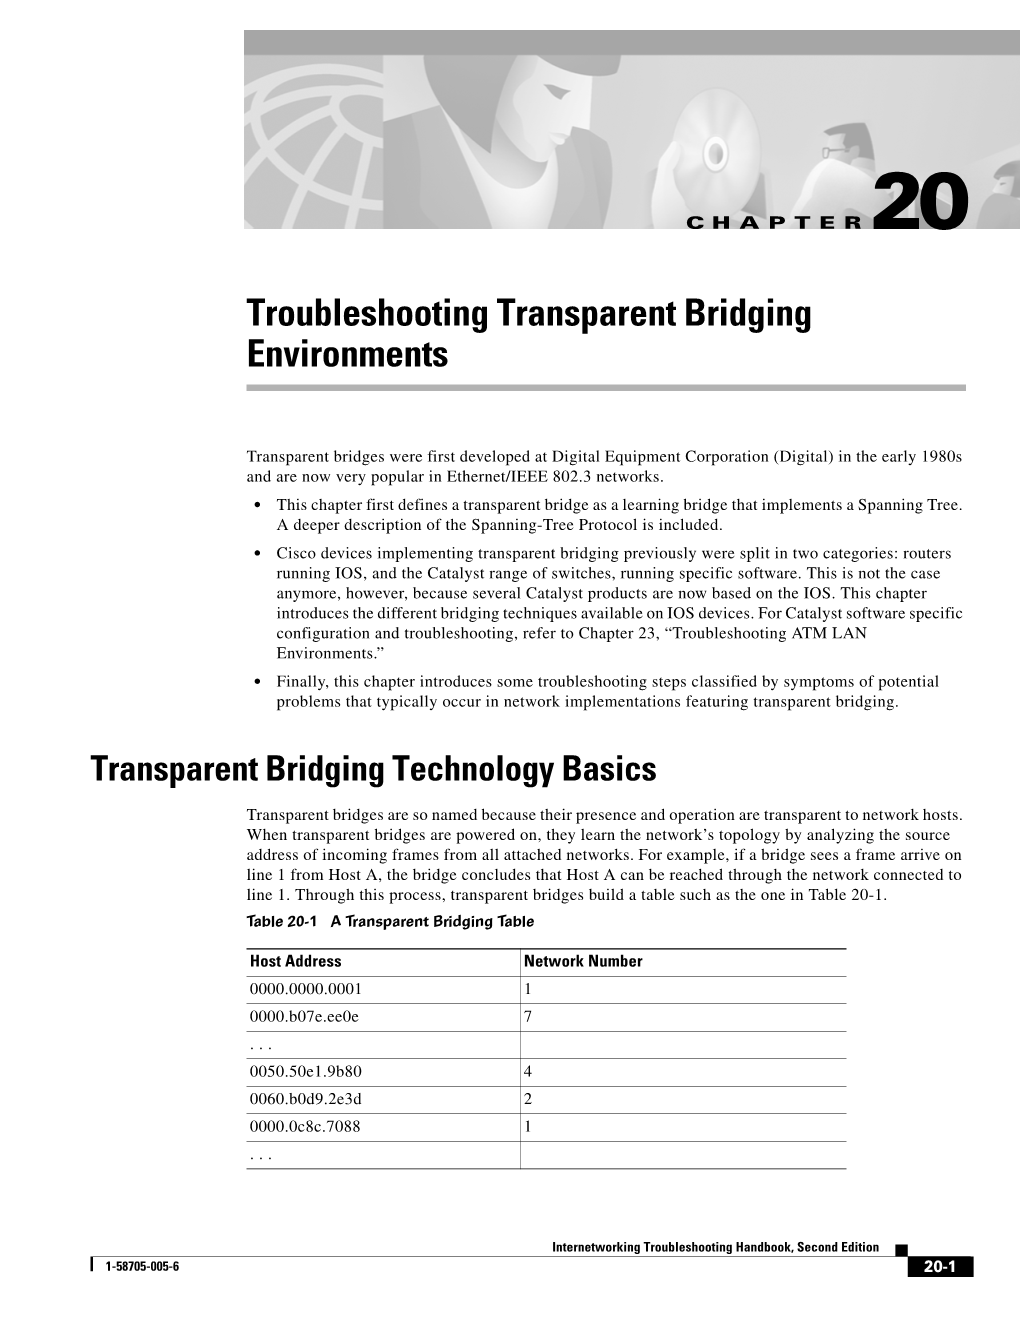 Troubleshooting Transparent Bridging Environments